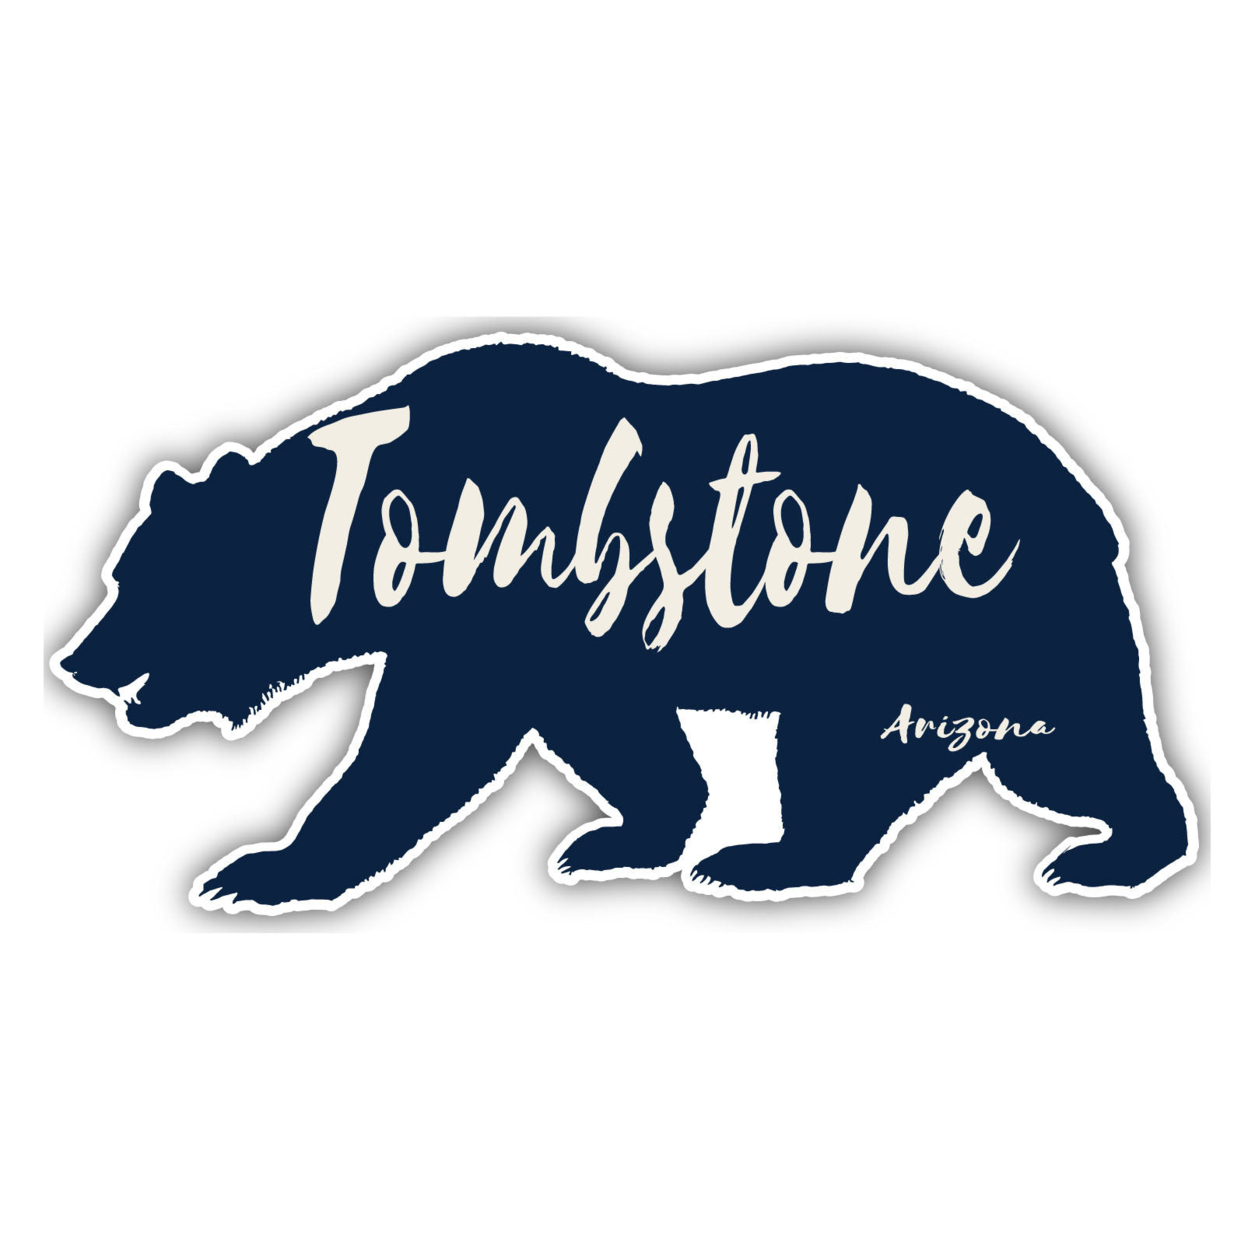 Tombstone Arizona Souvenir Decorative Stickers (Choose Theme And Size) - Single Unit, 4-Inch, Tent